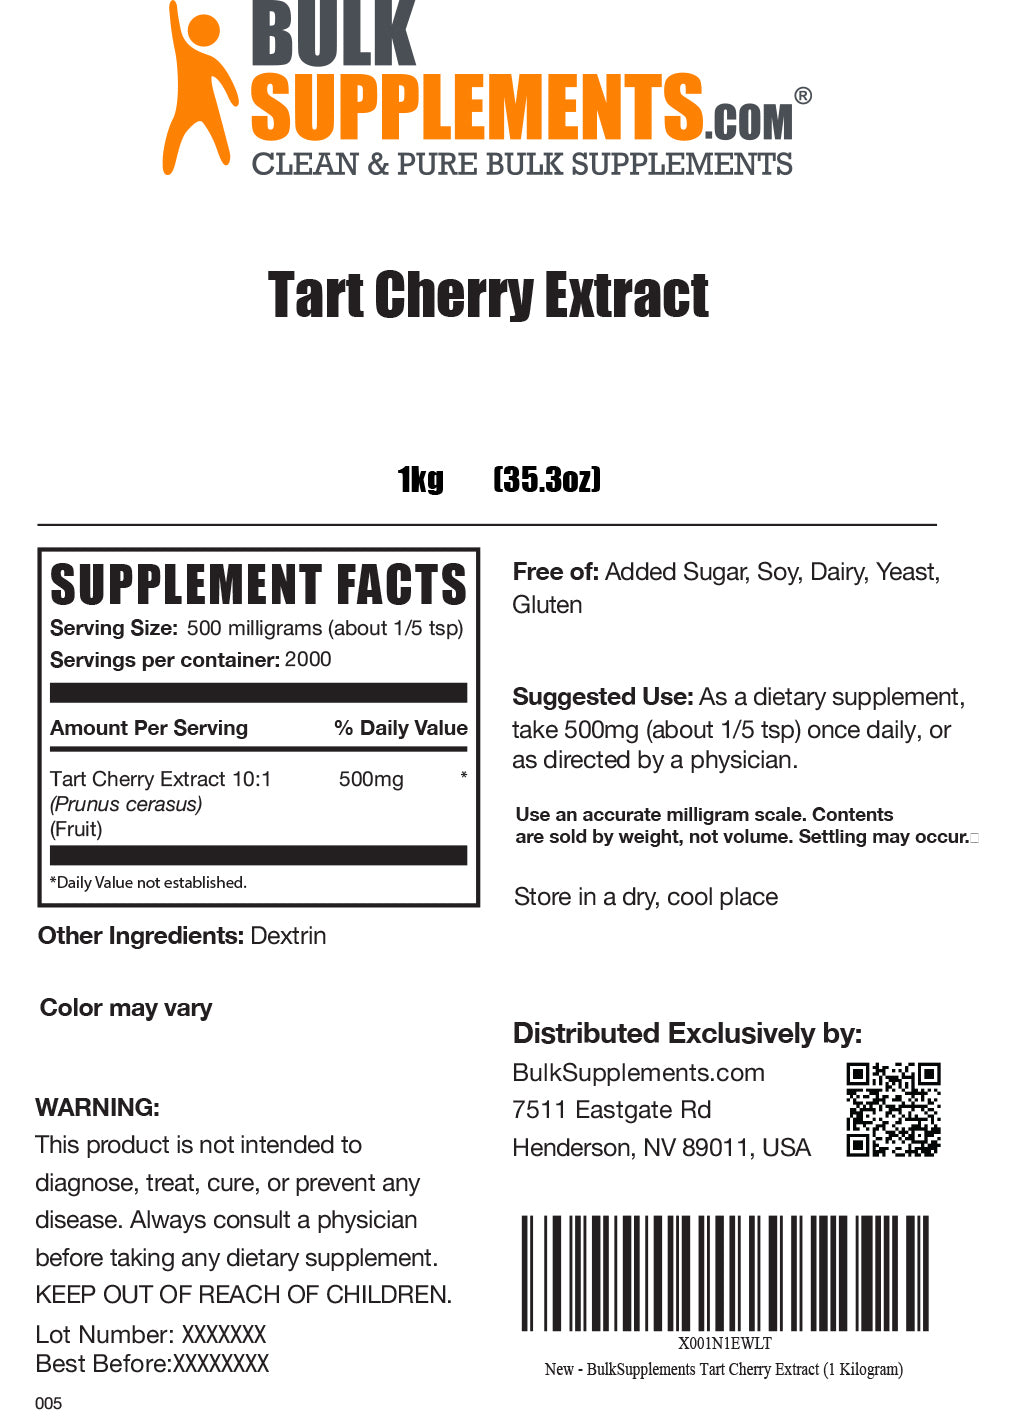 Tart Cherry Extract supplement facts